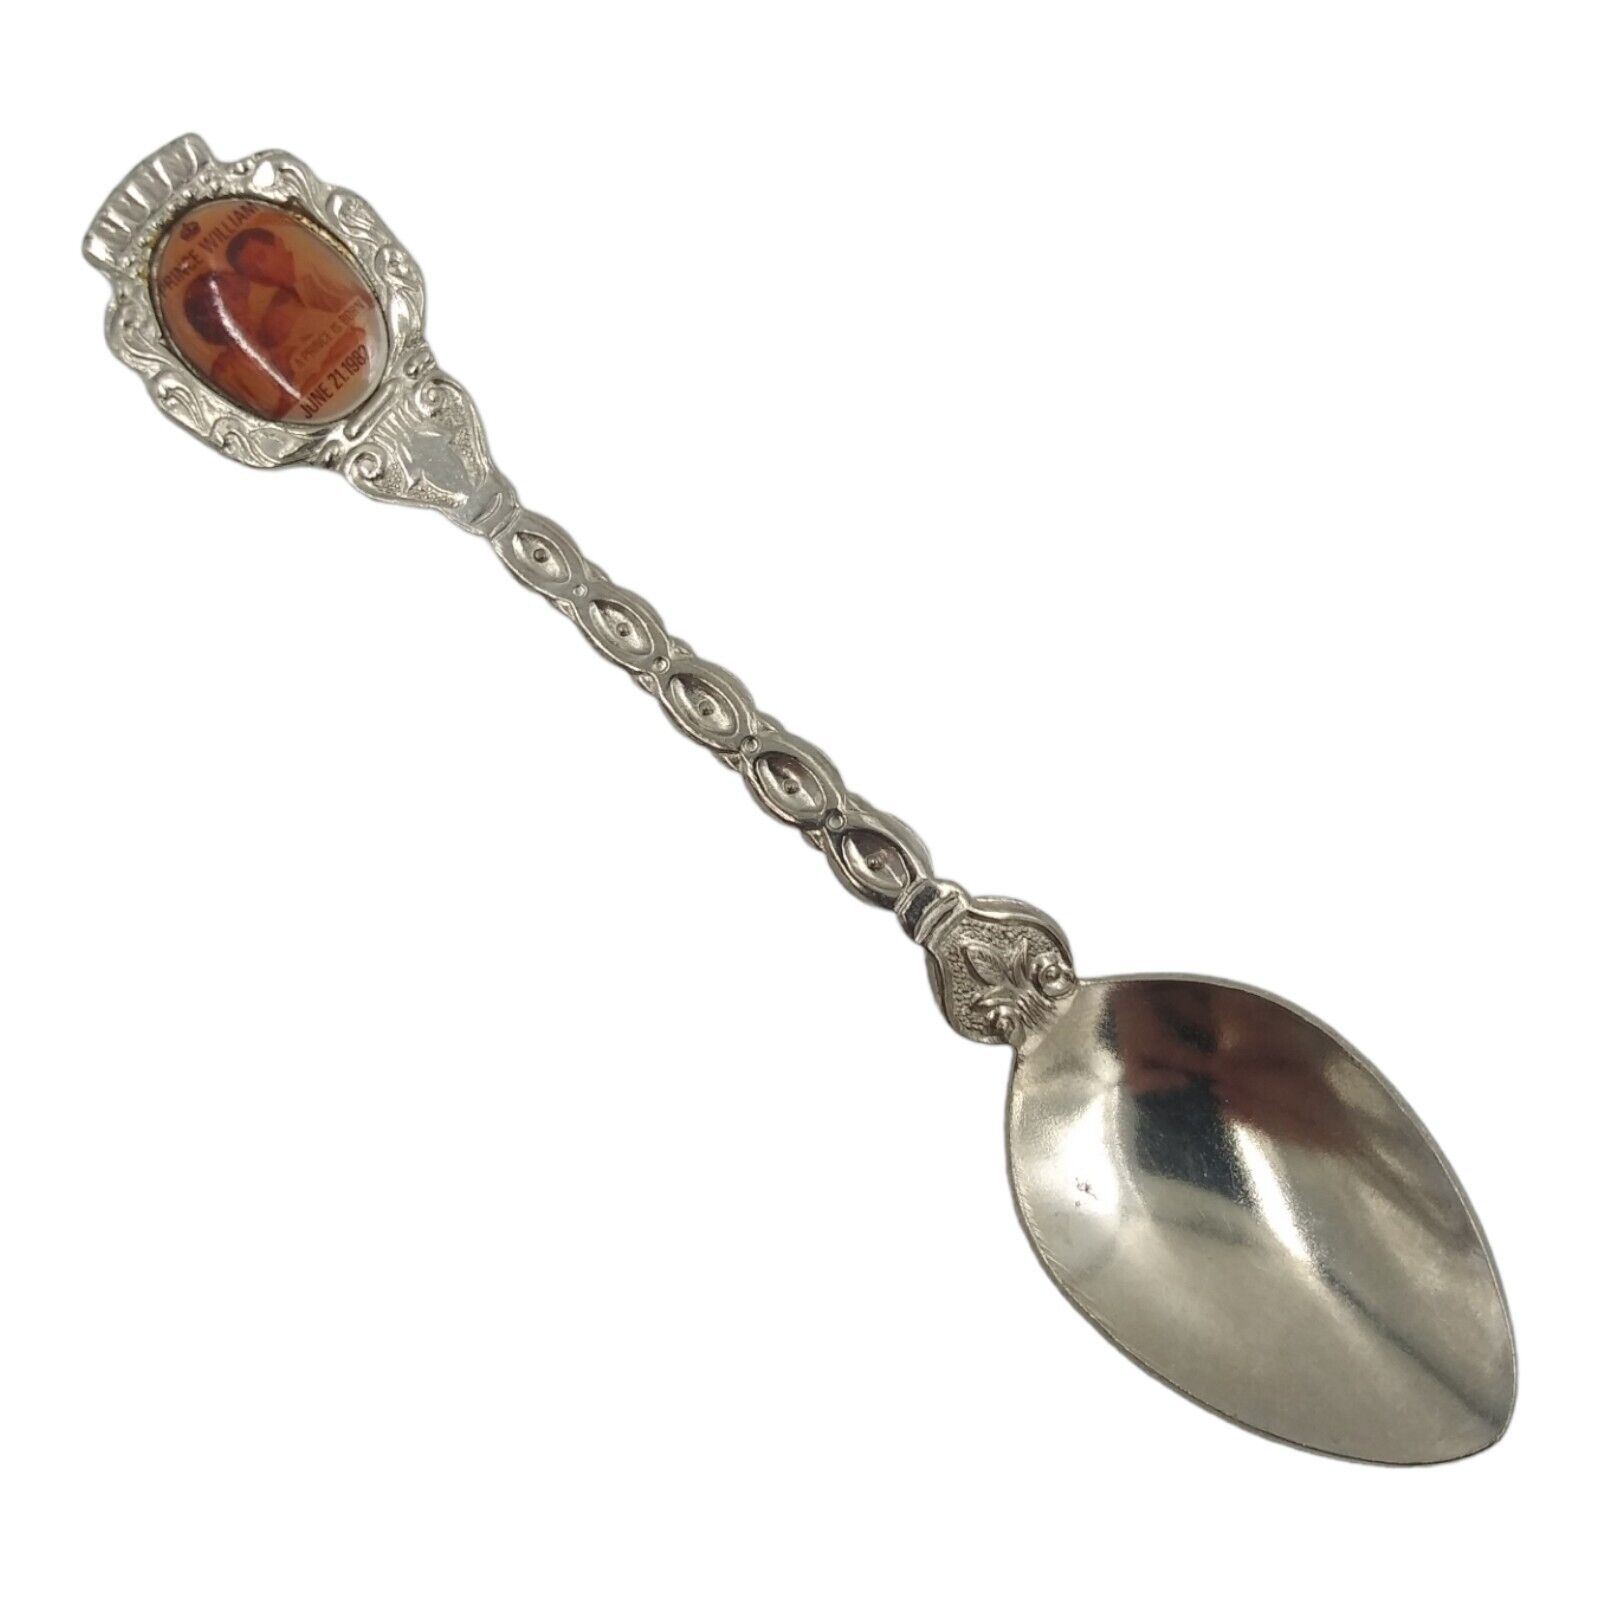 Vintage Souvenir Spoon Collectible Charles Diana William Birth